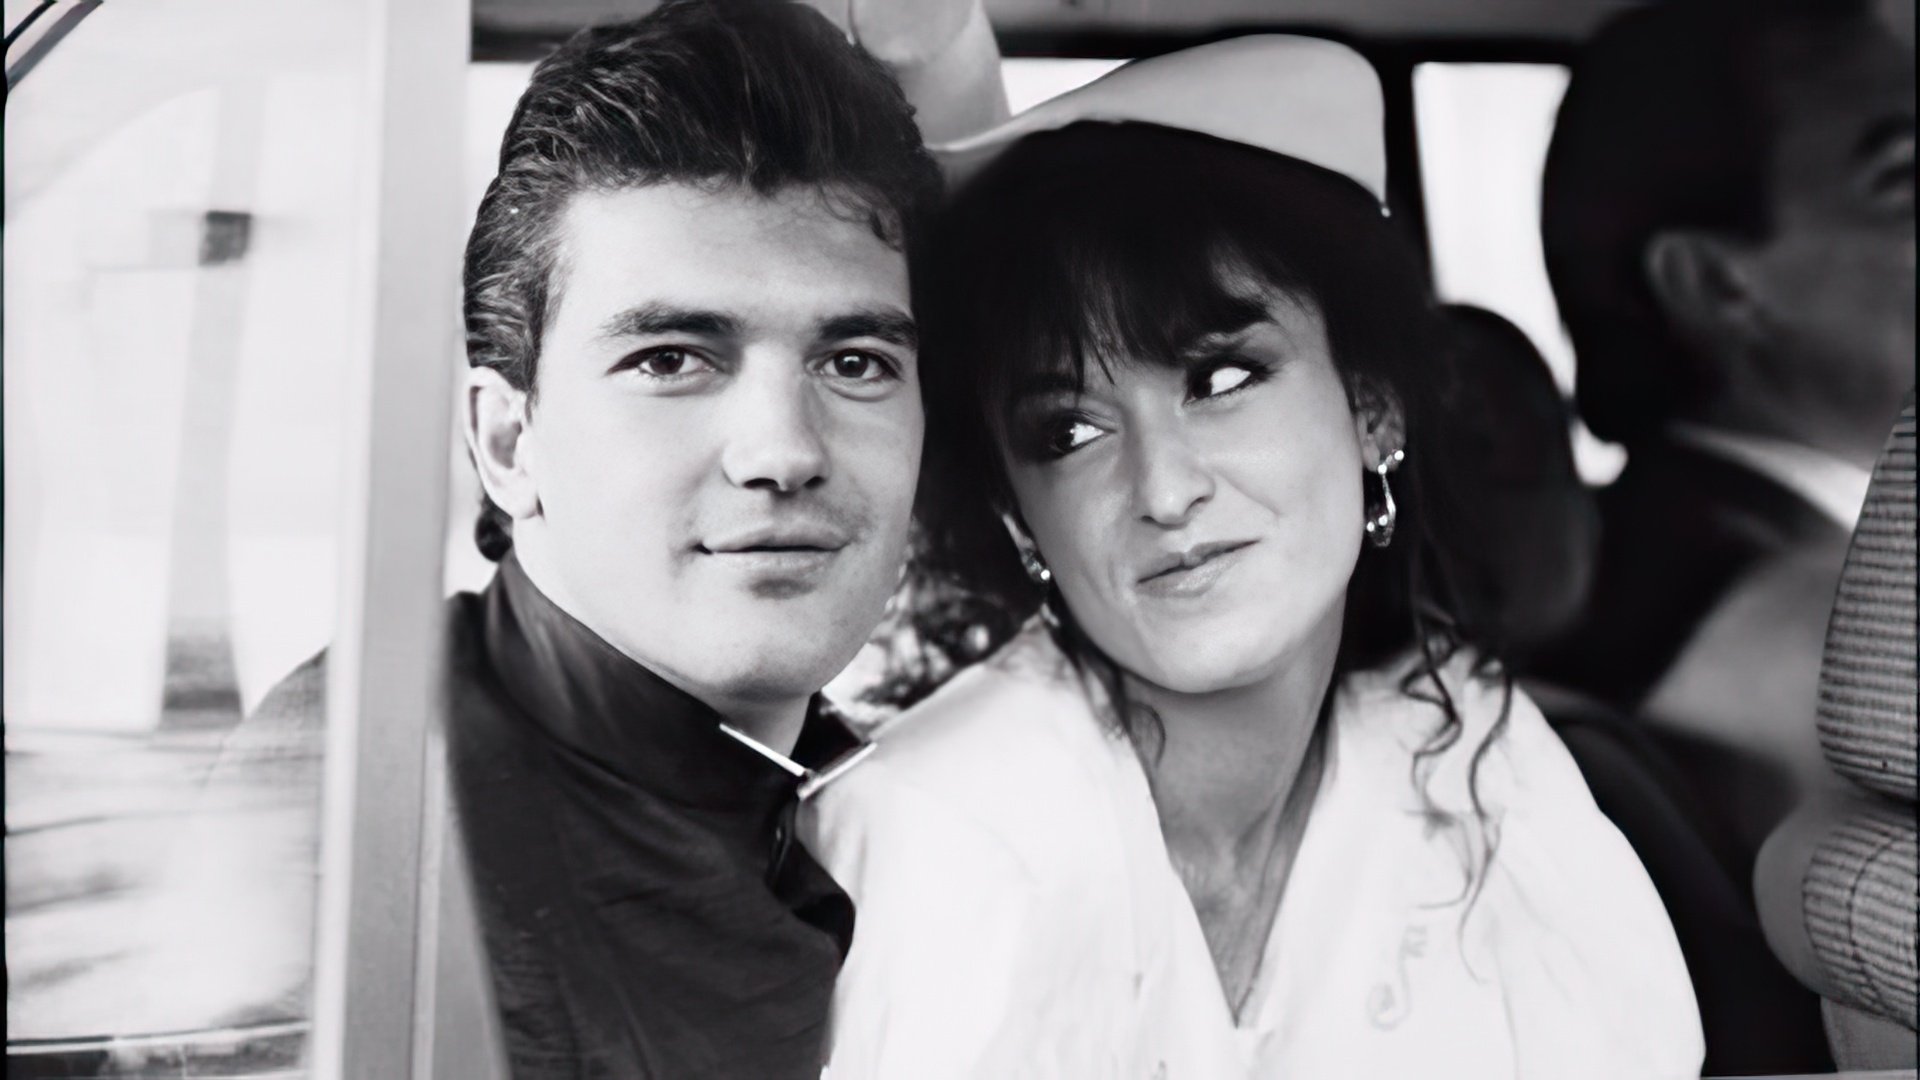 Antonio Banderas and his first wife Ana Leza